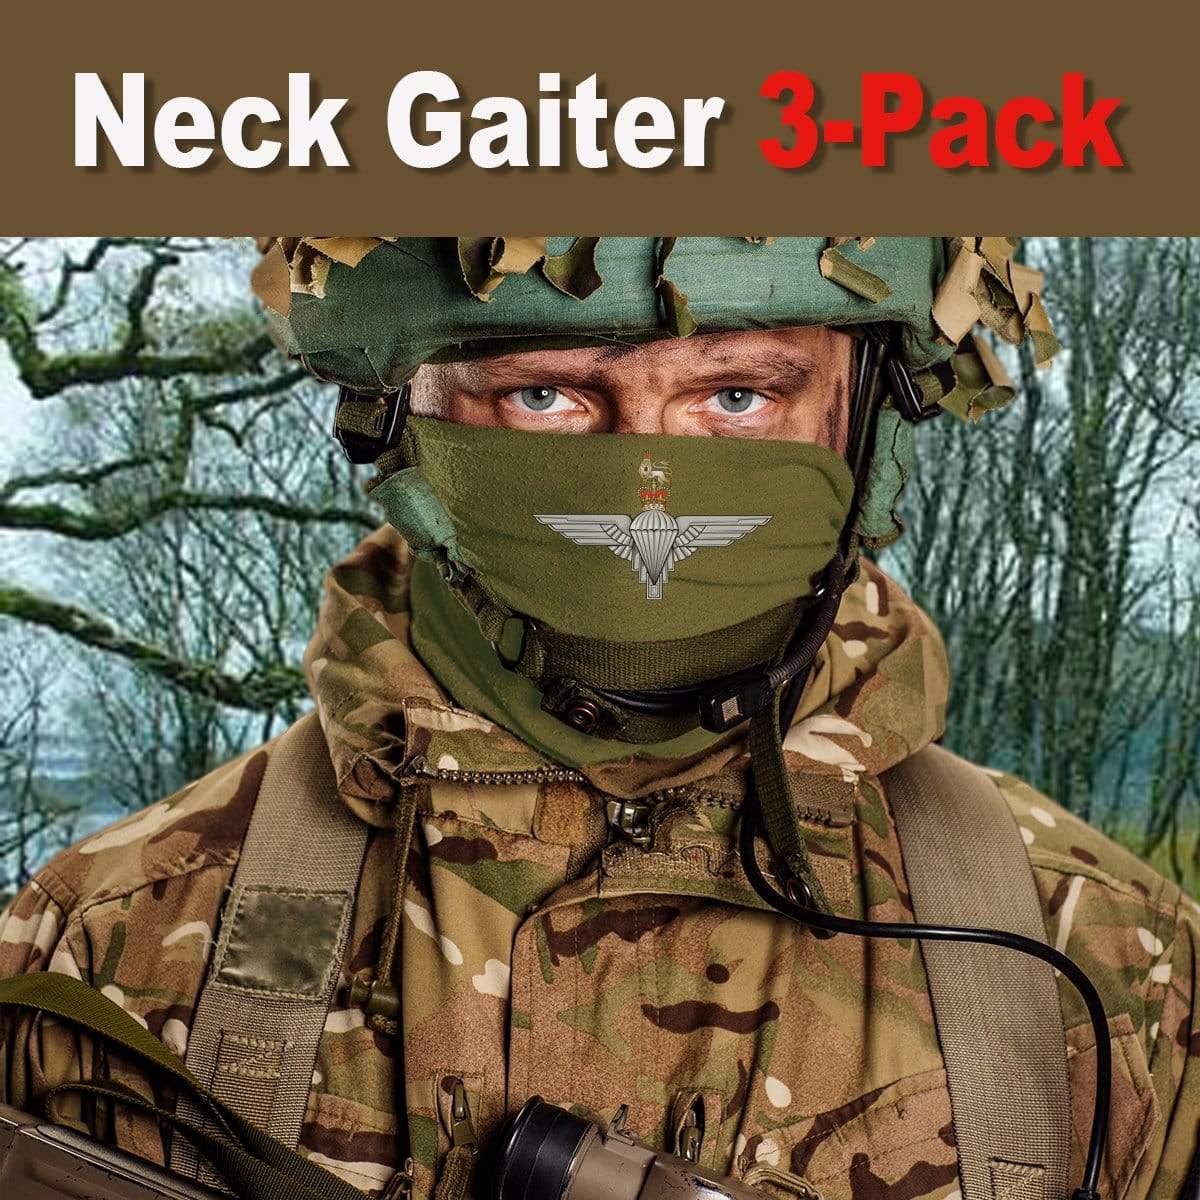 neck gaiter Bandana 3-Pack - Parachute Regiment Neck Gaiter 3-Pack Parachute Regiment Neck Gaiter/Headover 3-Pack